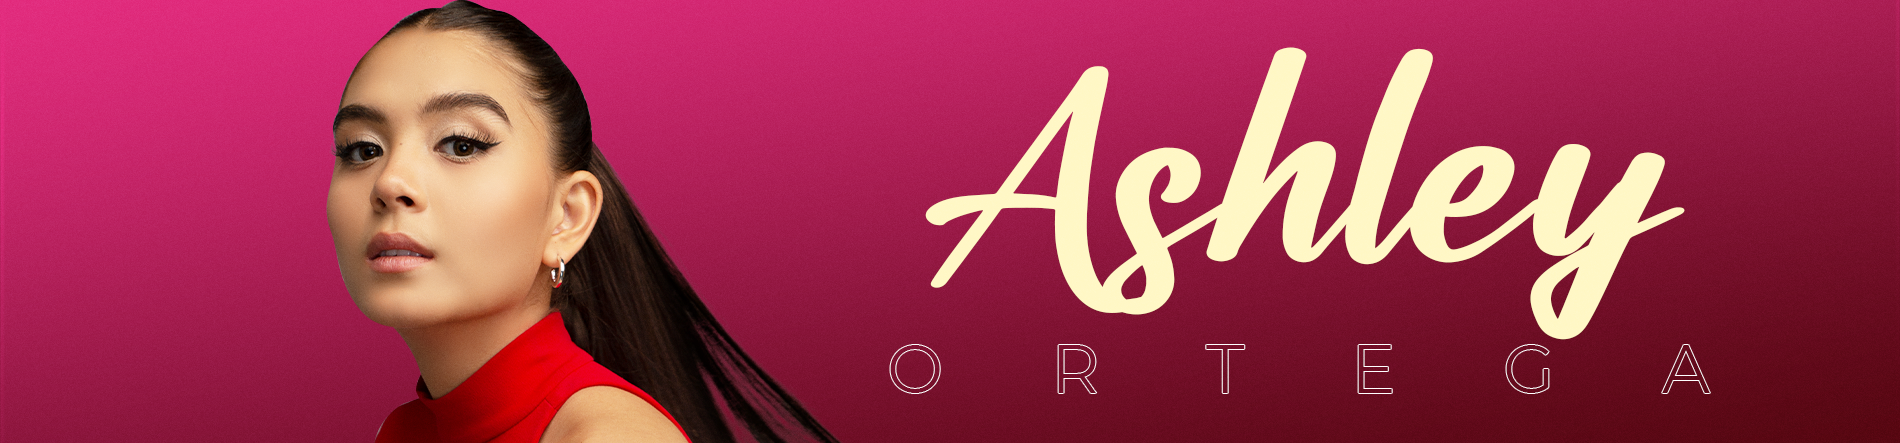 Ashley Ortega Desktop Banner